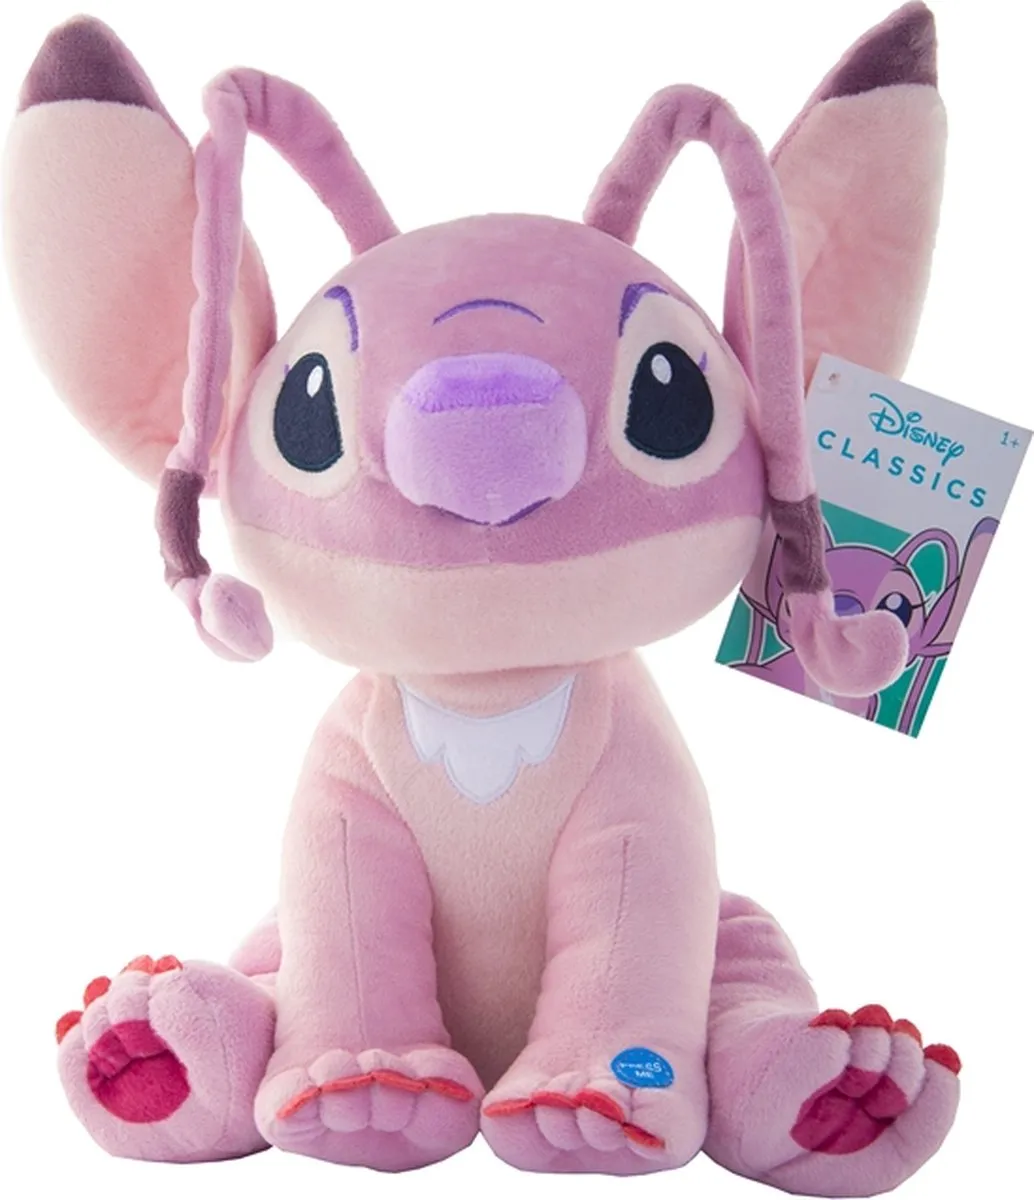 Disney - Angel knuffel met geluid - 30 cm - Pluche - Lilo & Stitch - Disney knuffel speelgoed